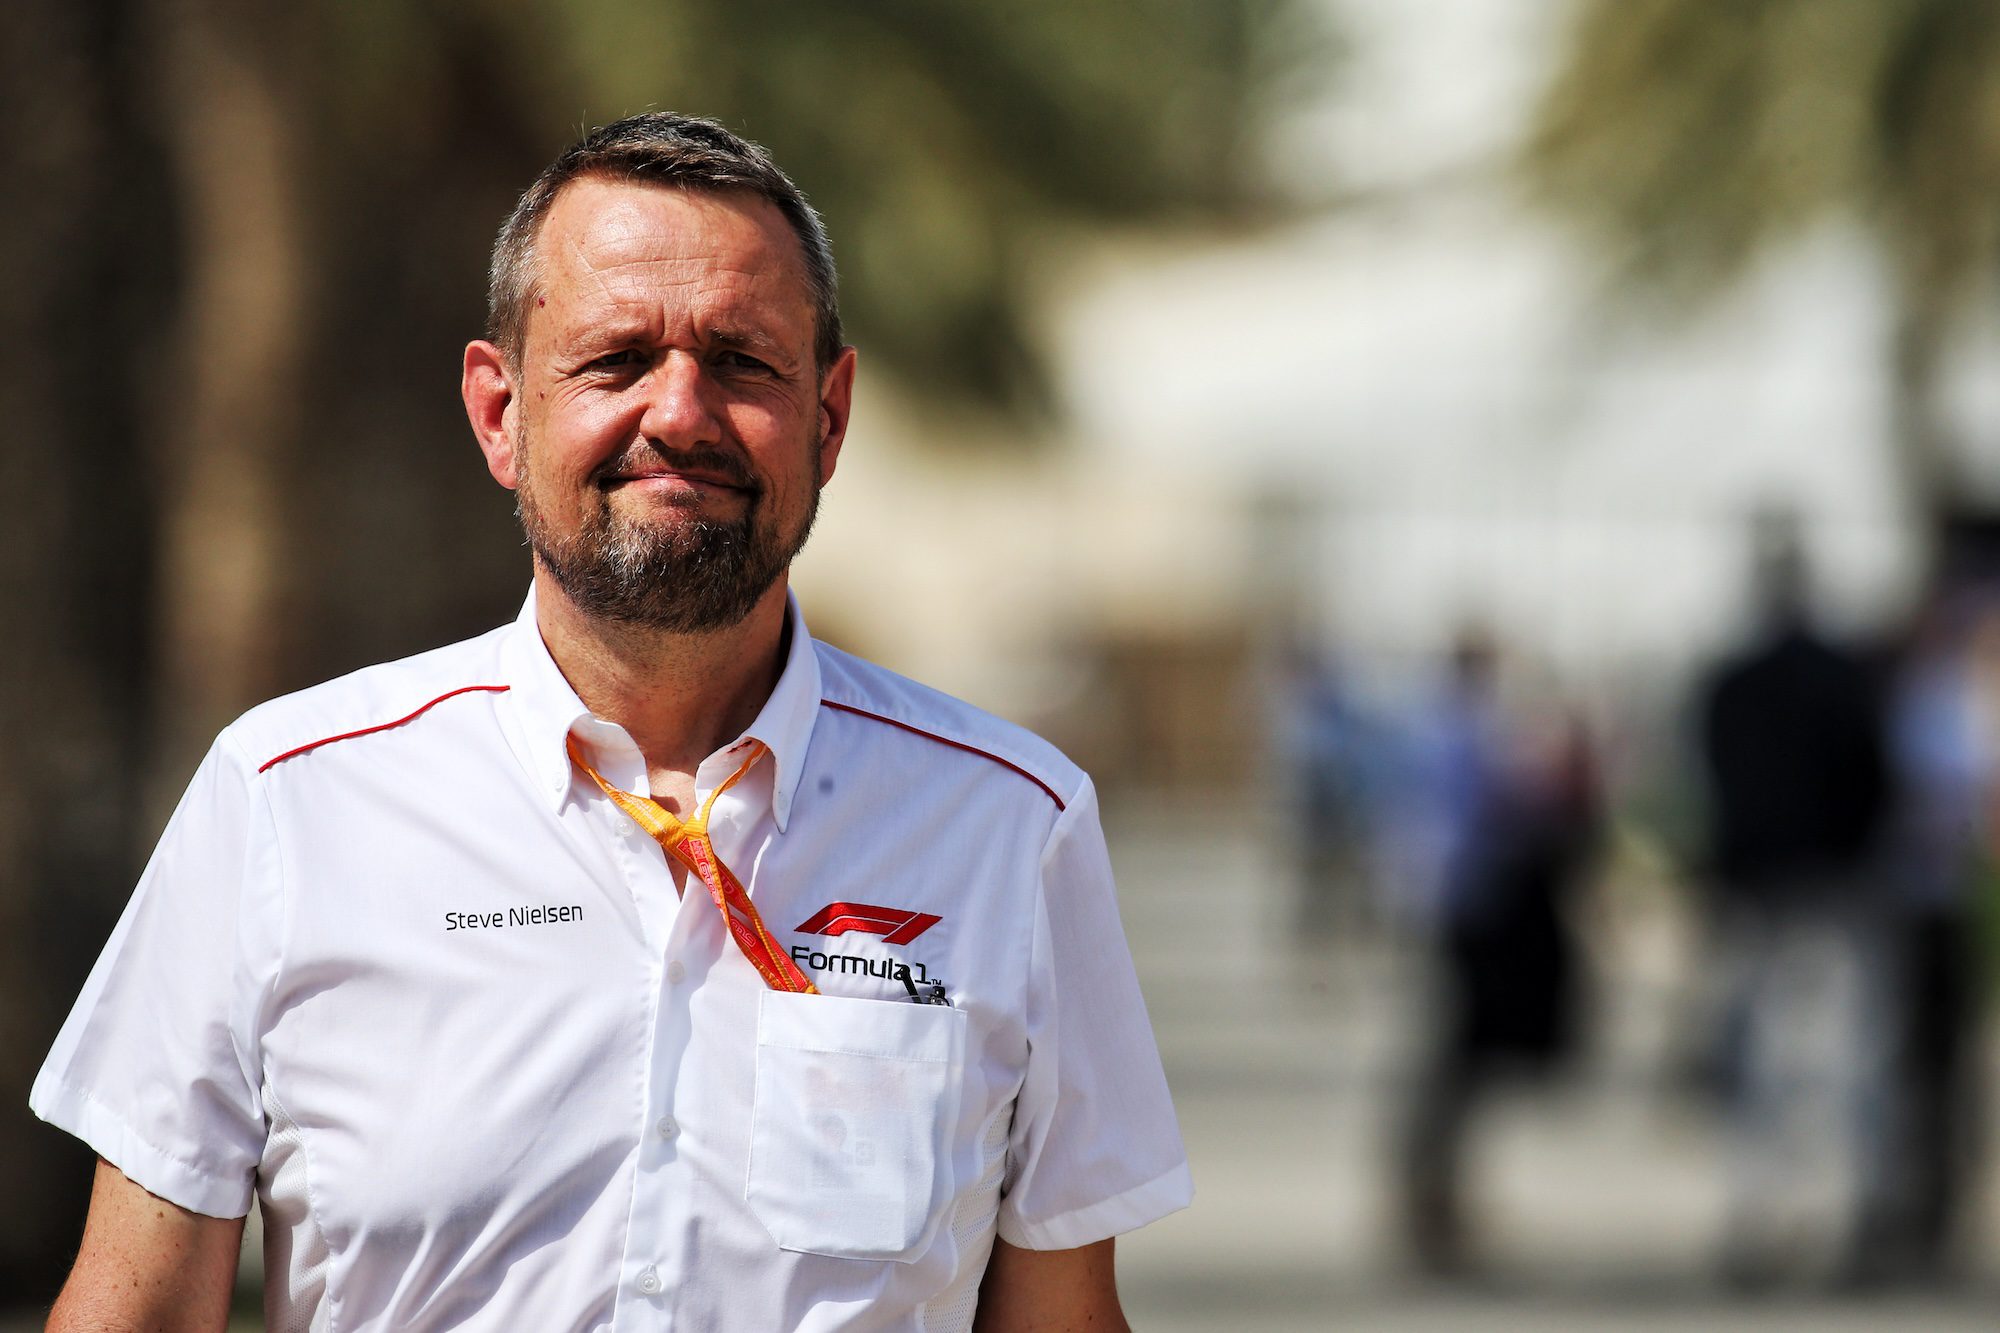 Nielsen volta à F1 como consultor após saída conturbada da FIA